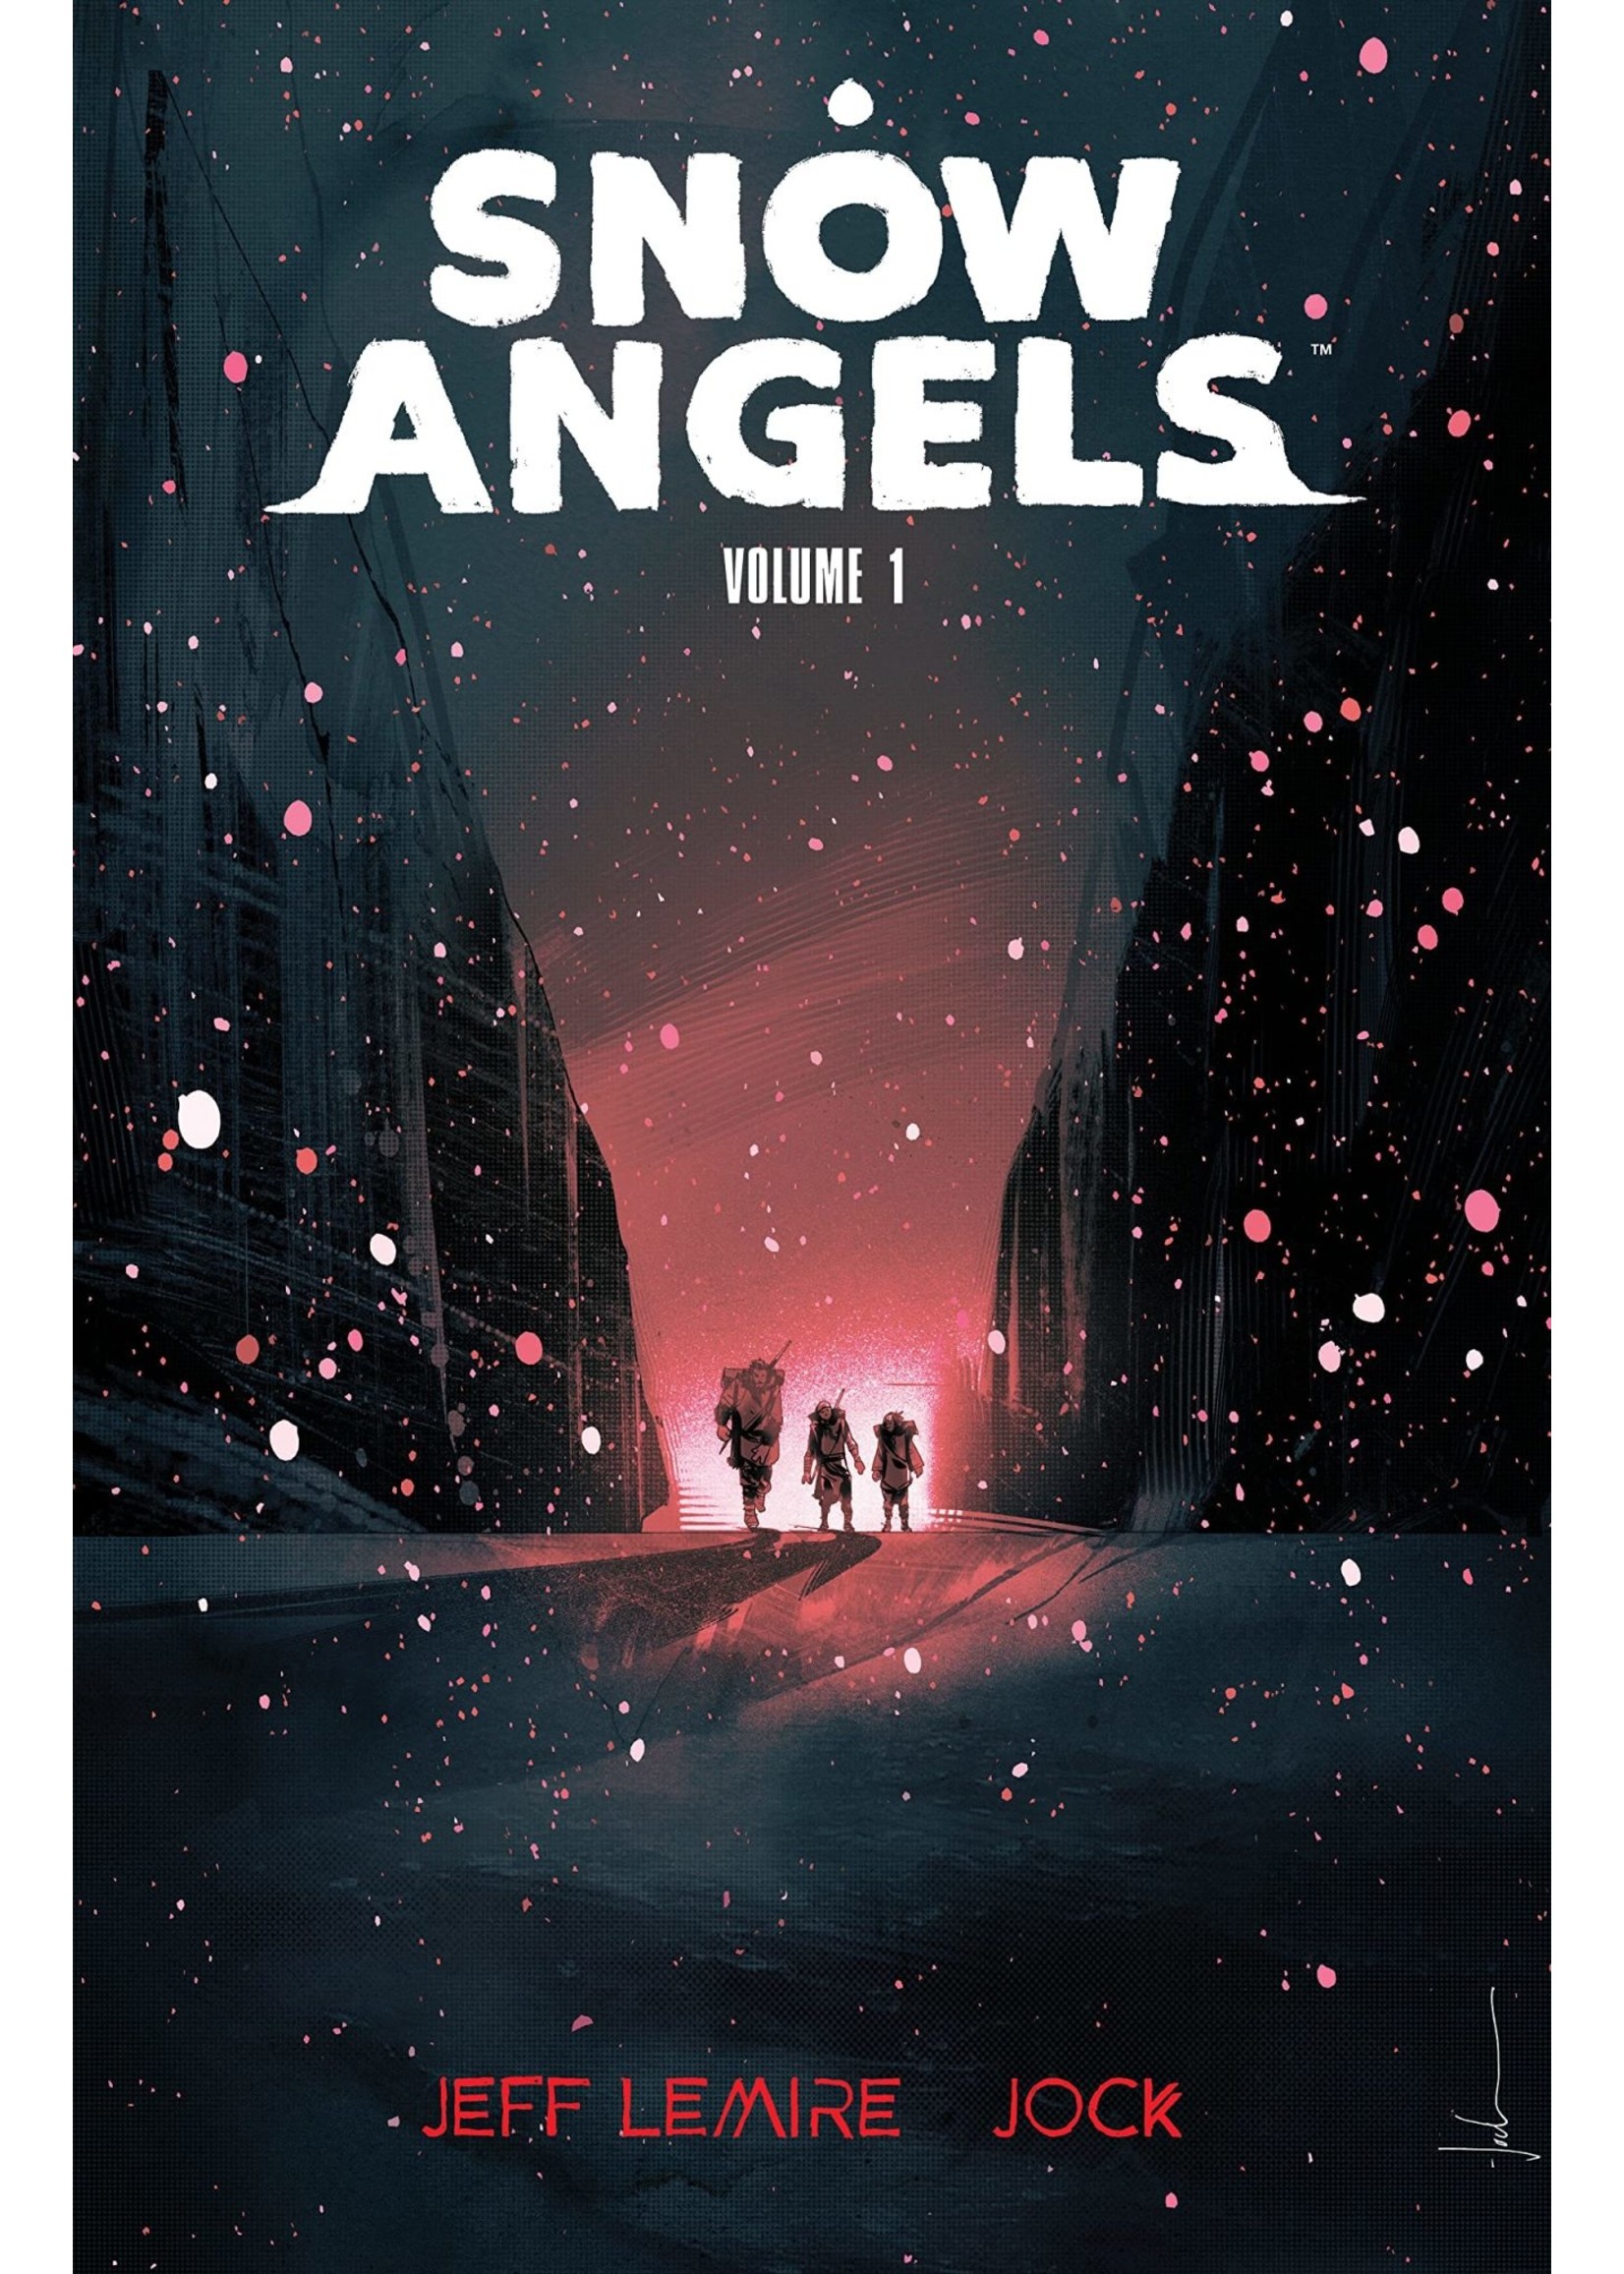 Snow Angels by Lemire & Jock - Vol 1